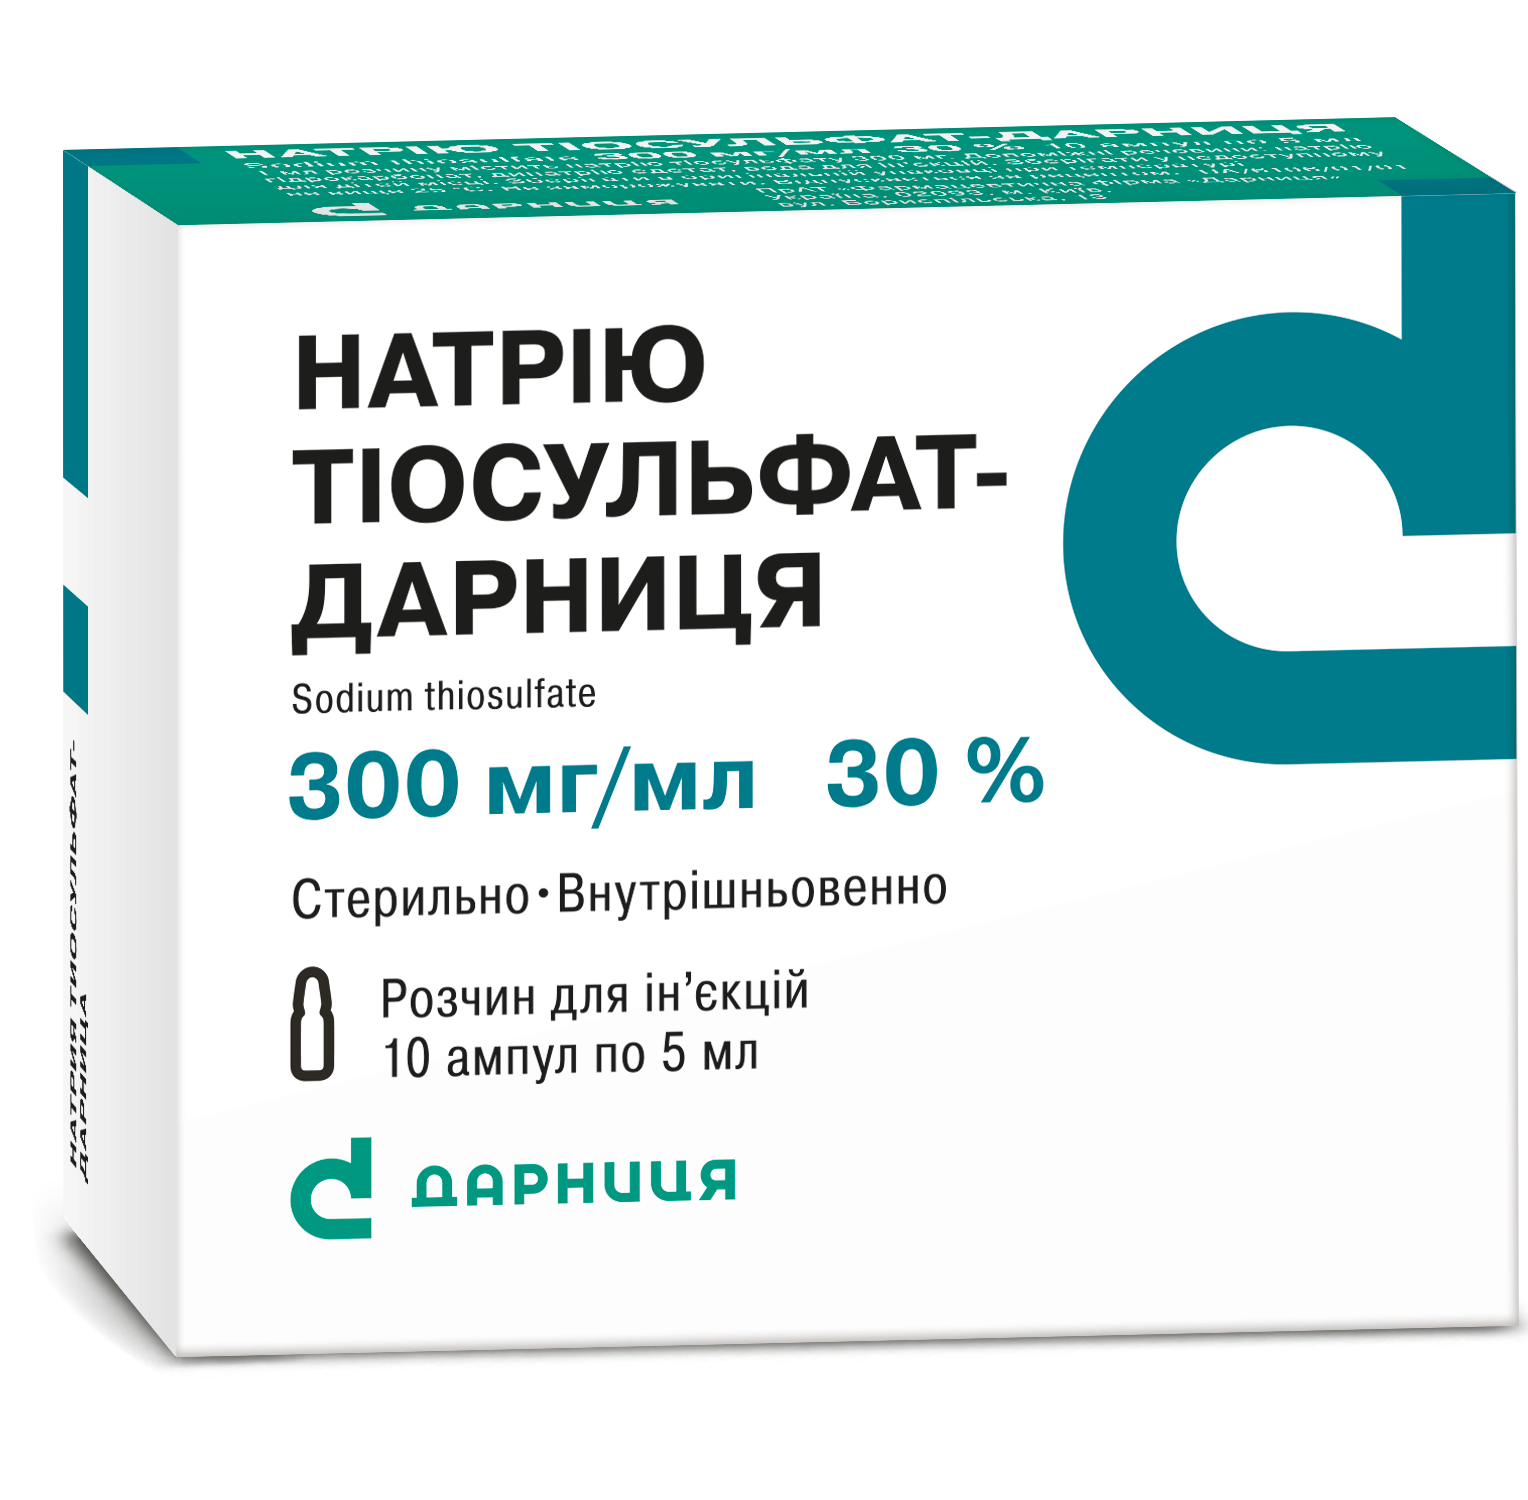 Sodium thiosulphate-Darnitsa